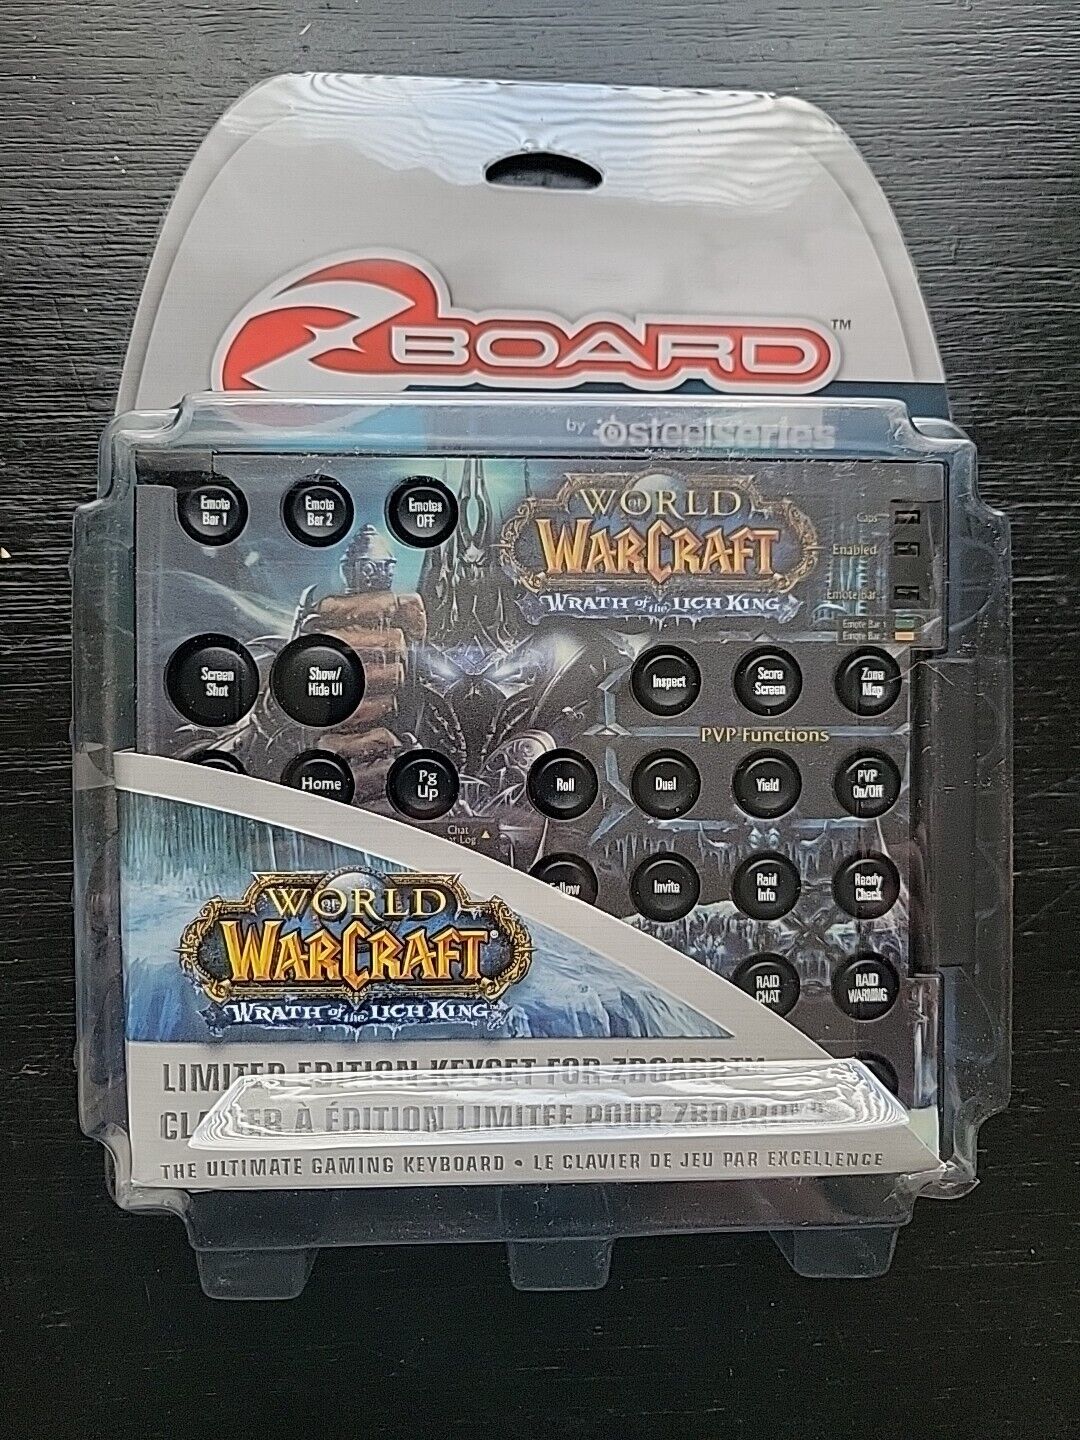 Zboard World Of Warcraft Limited Edition Gaming Keyboard Keyset Wrath Lich King